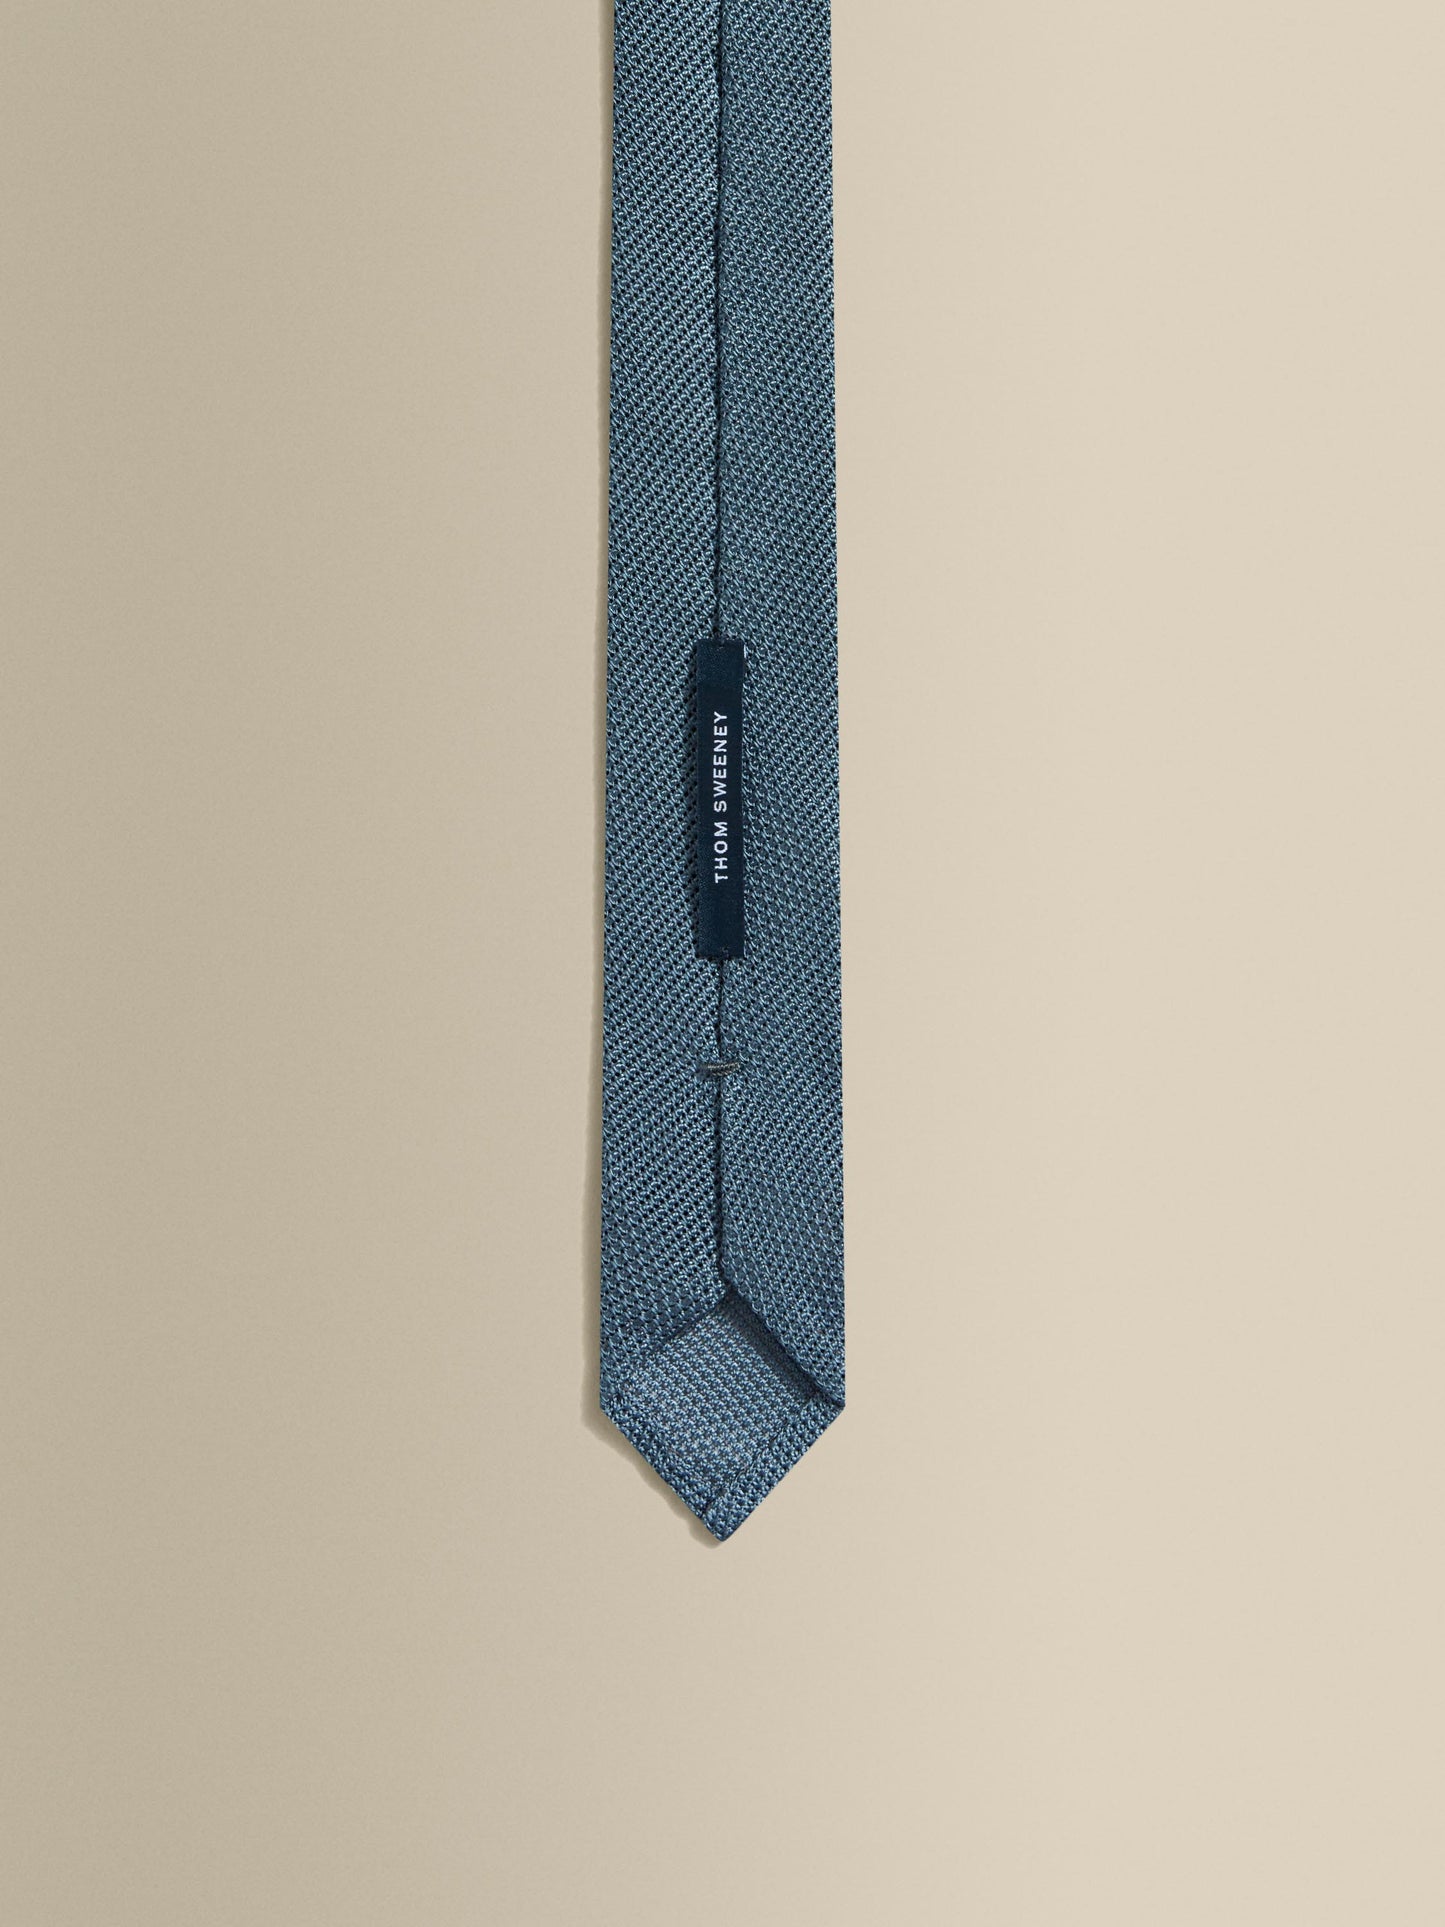 Silk Grenadine Tie Slate Grey Detail Product Image